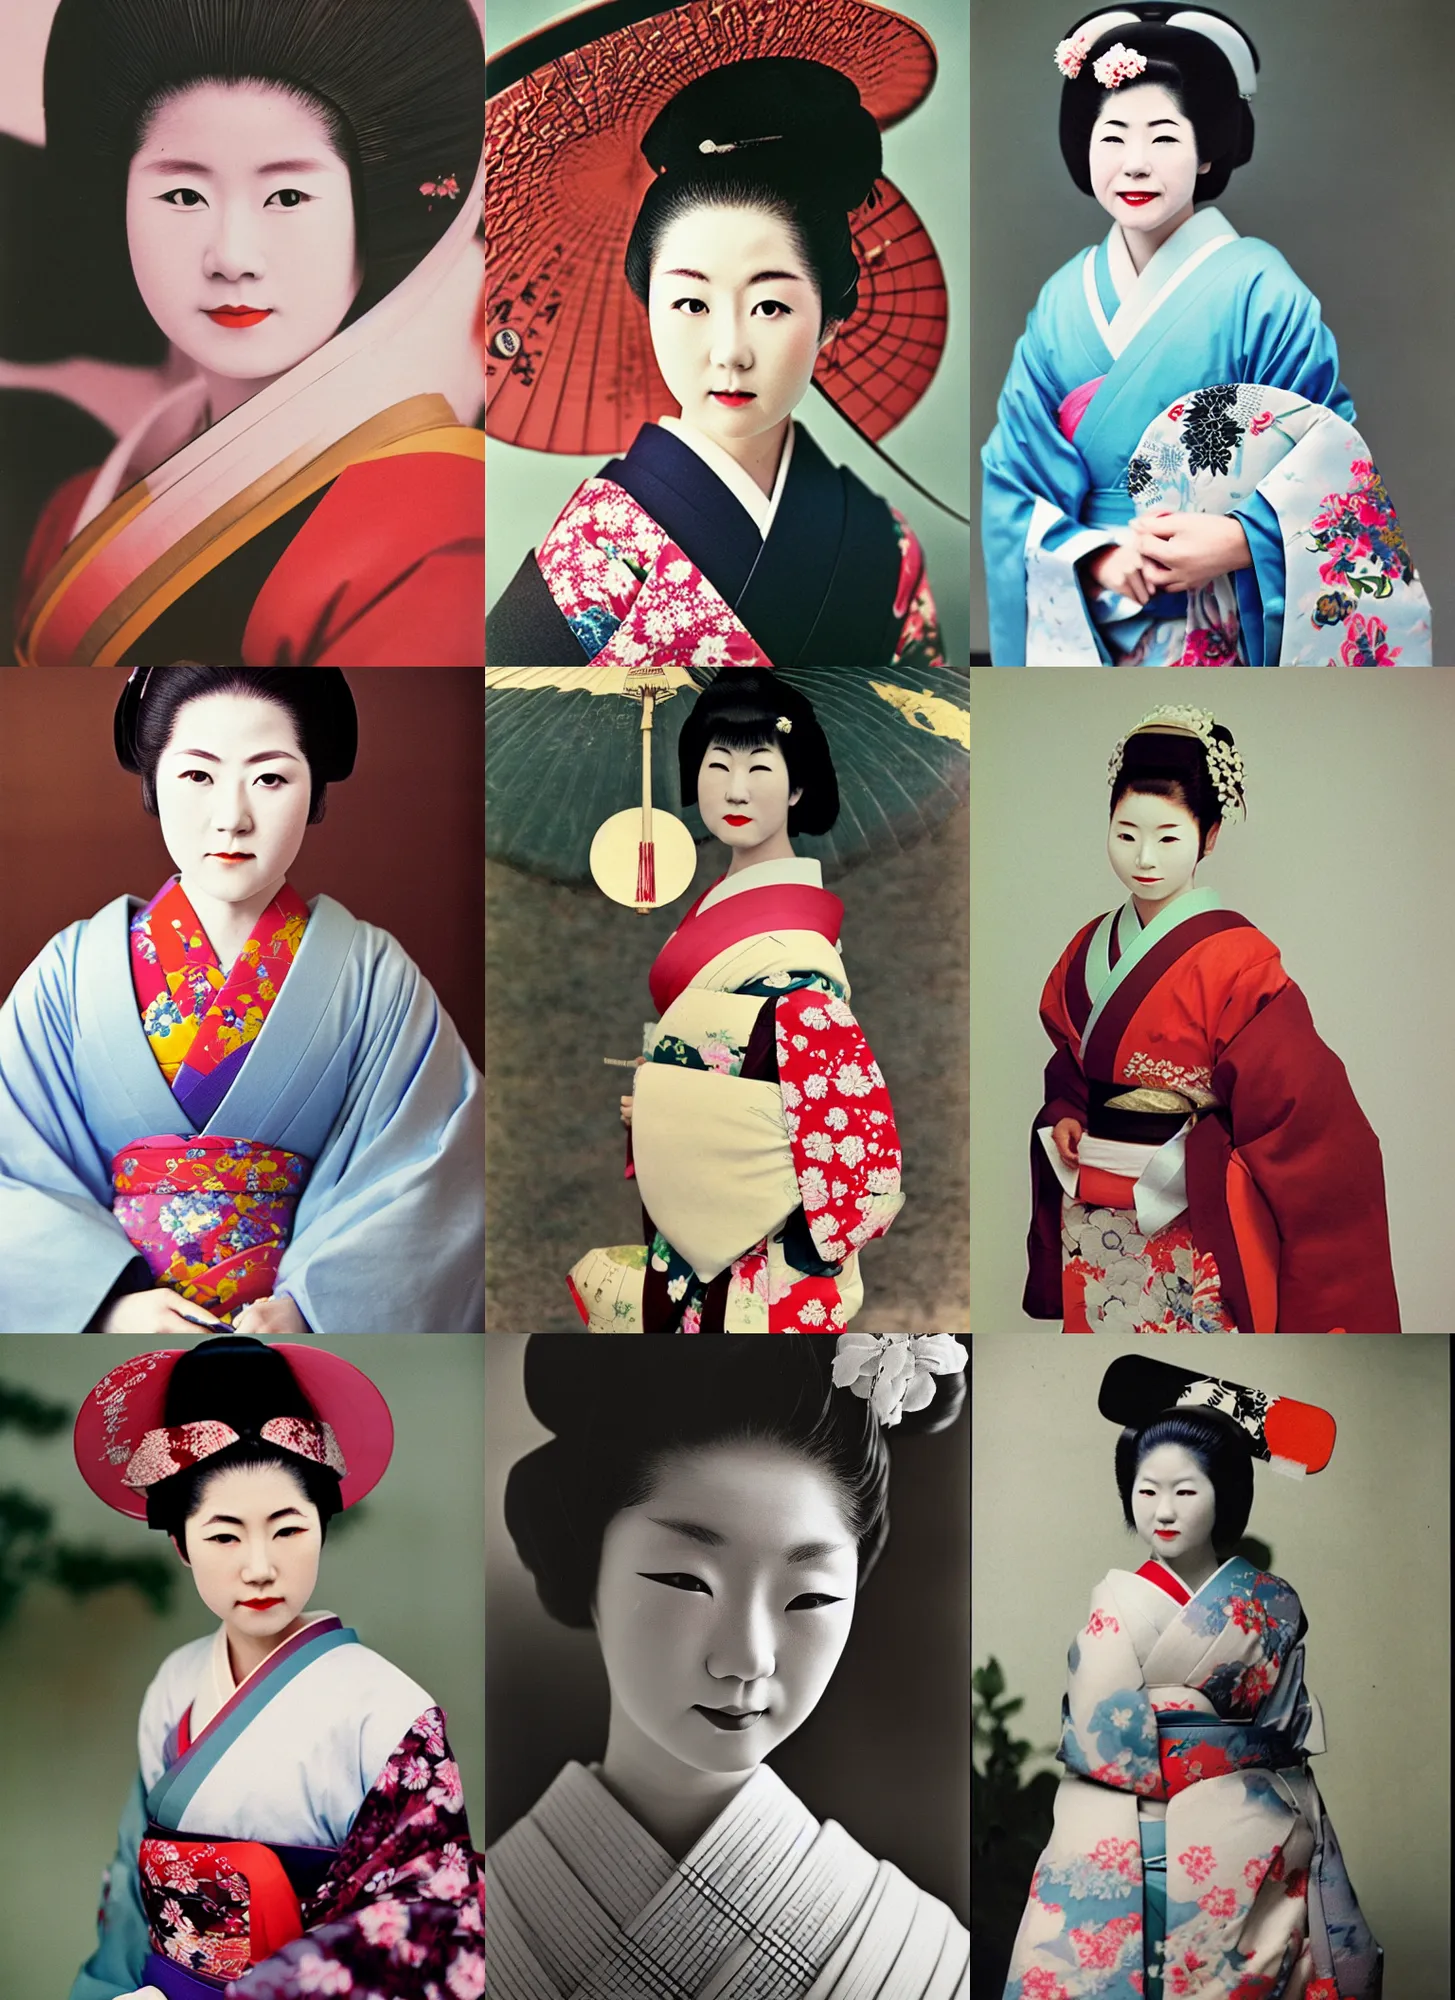 Prompt: Portrait Photograph of a Japanese Geisha Kodachrome 64